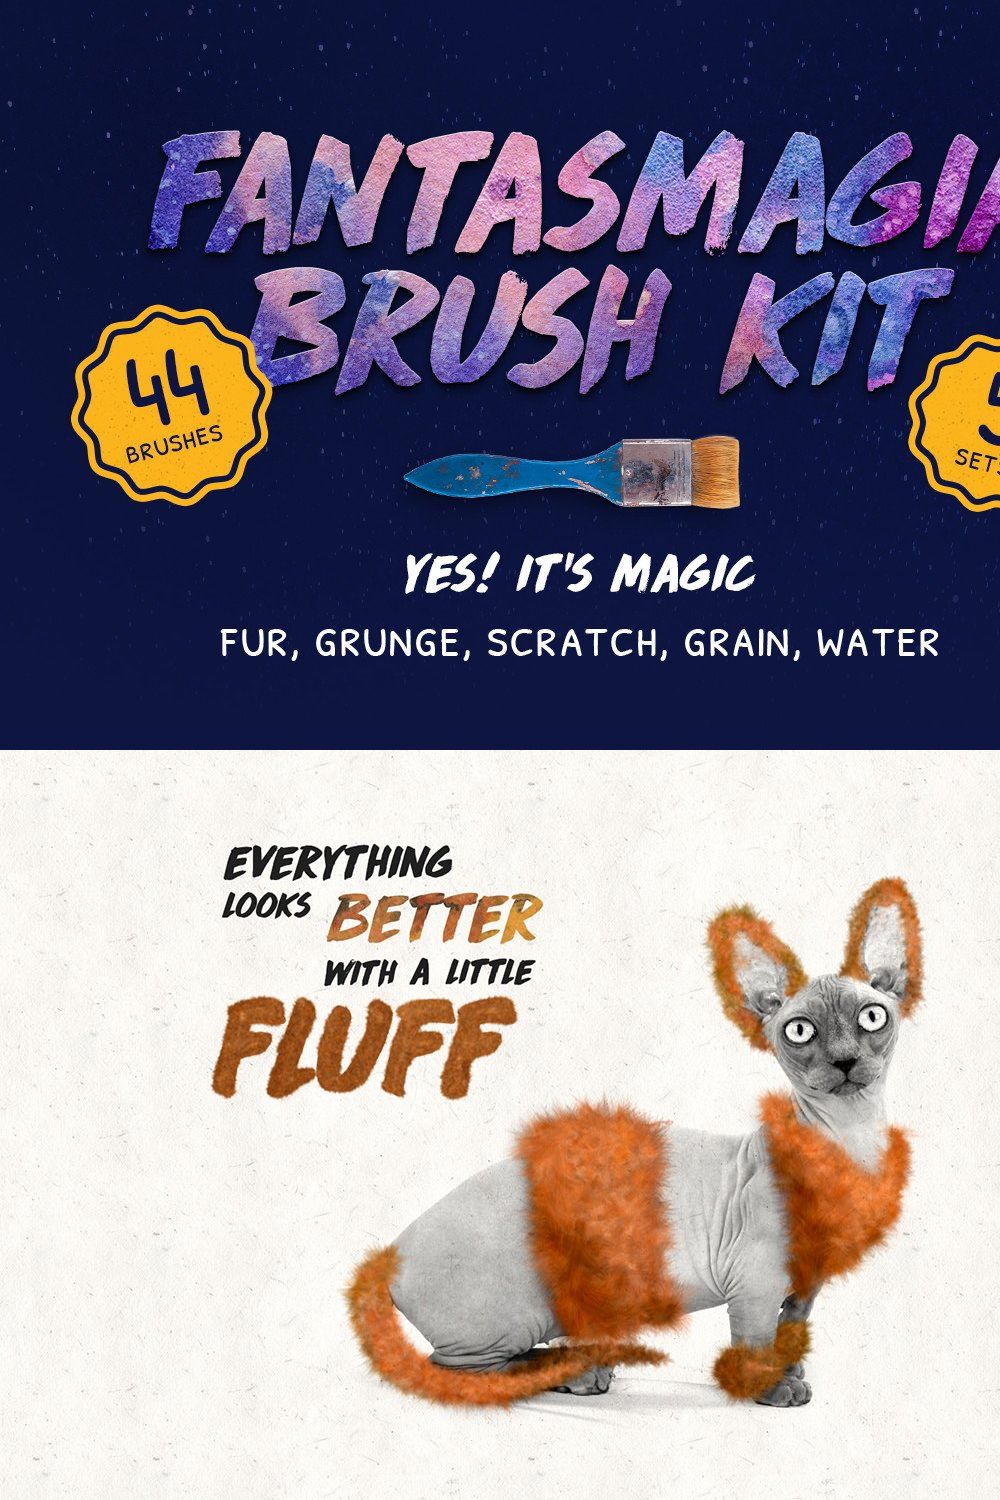 Fantasmagia Brush Kit pinterest preview image.